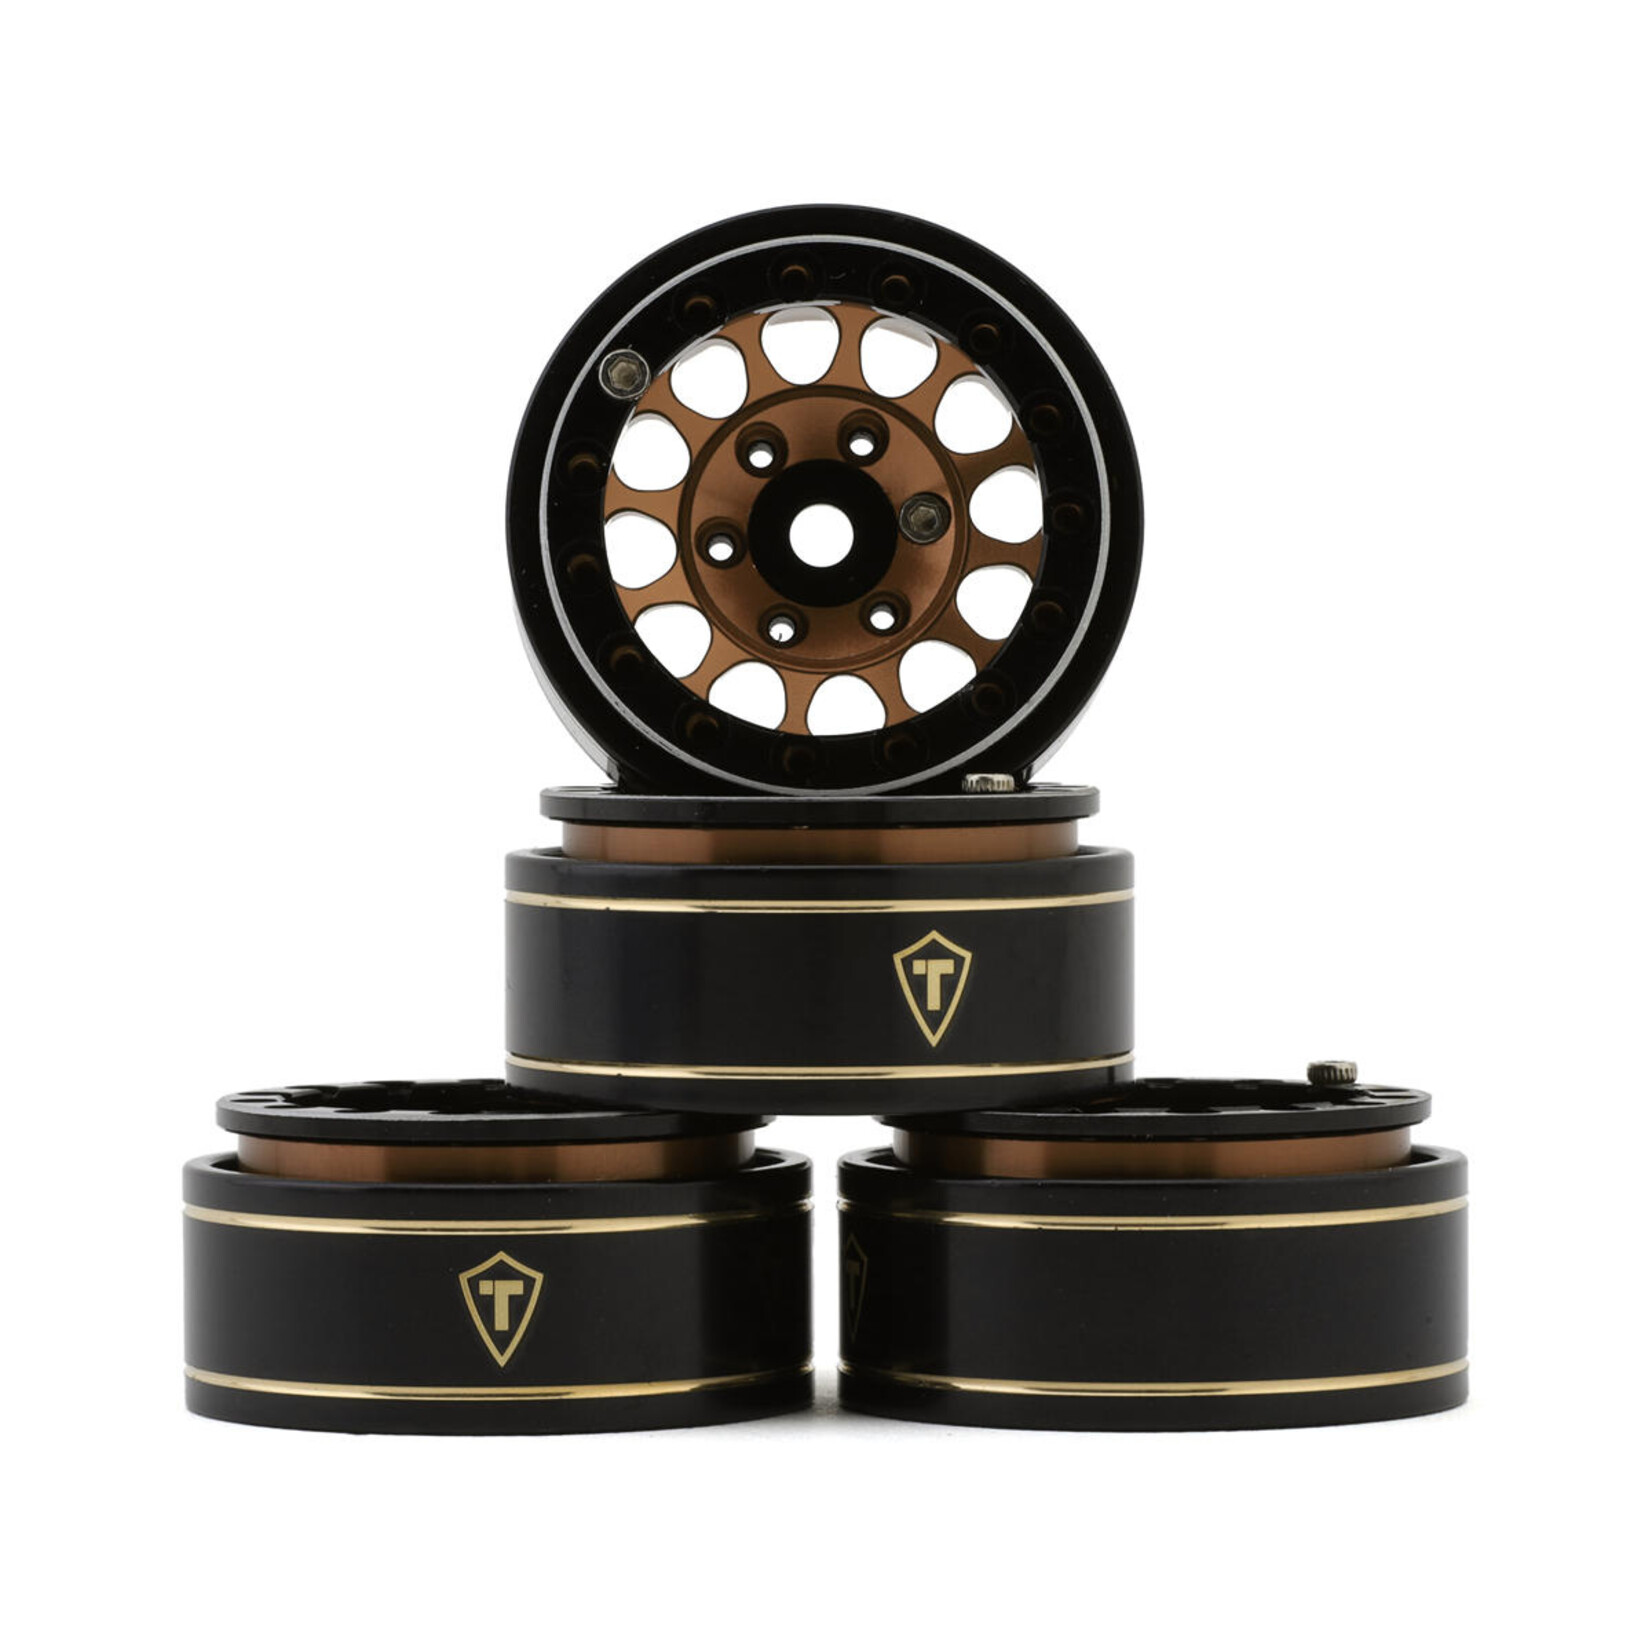 Treal Treal Hobby Type I 1.0" Classic 12-Spoke Beadlock Wheels (Bronze) (4) (27.2g) #X003ZQK1VZ